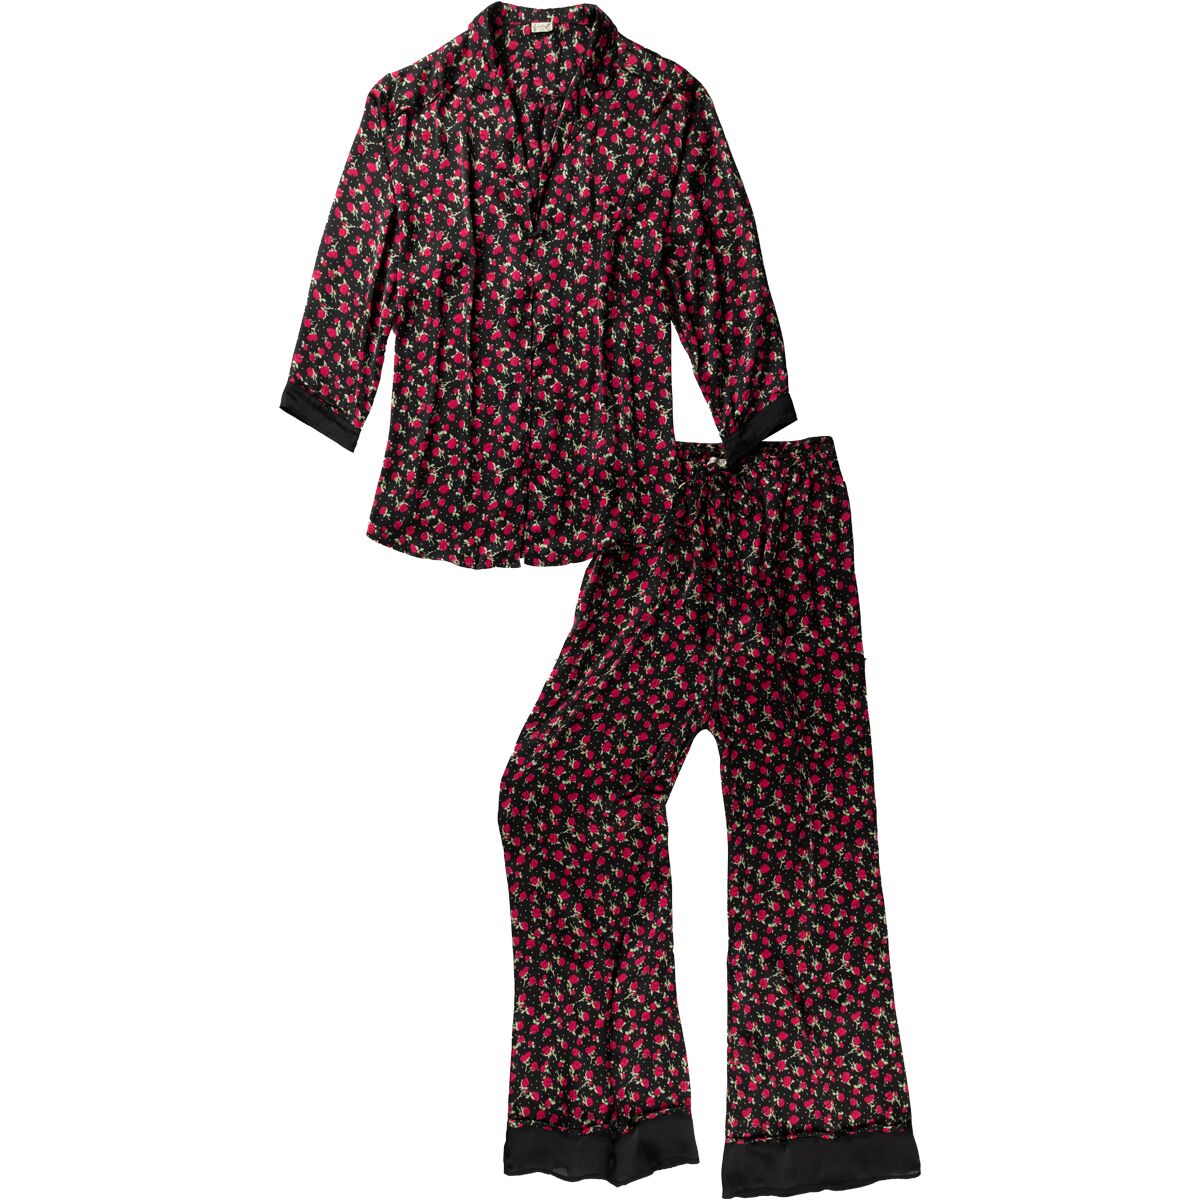 Free People Dreamy Days Pajama Set - Women's